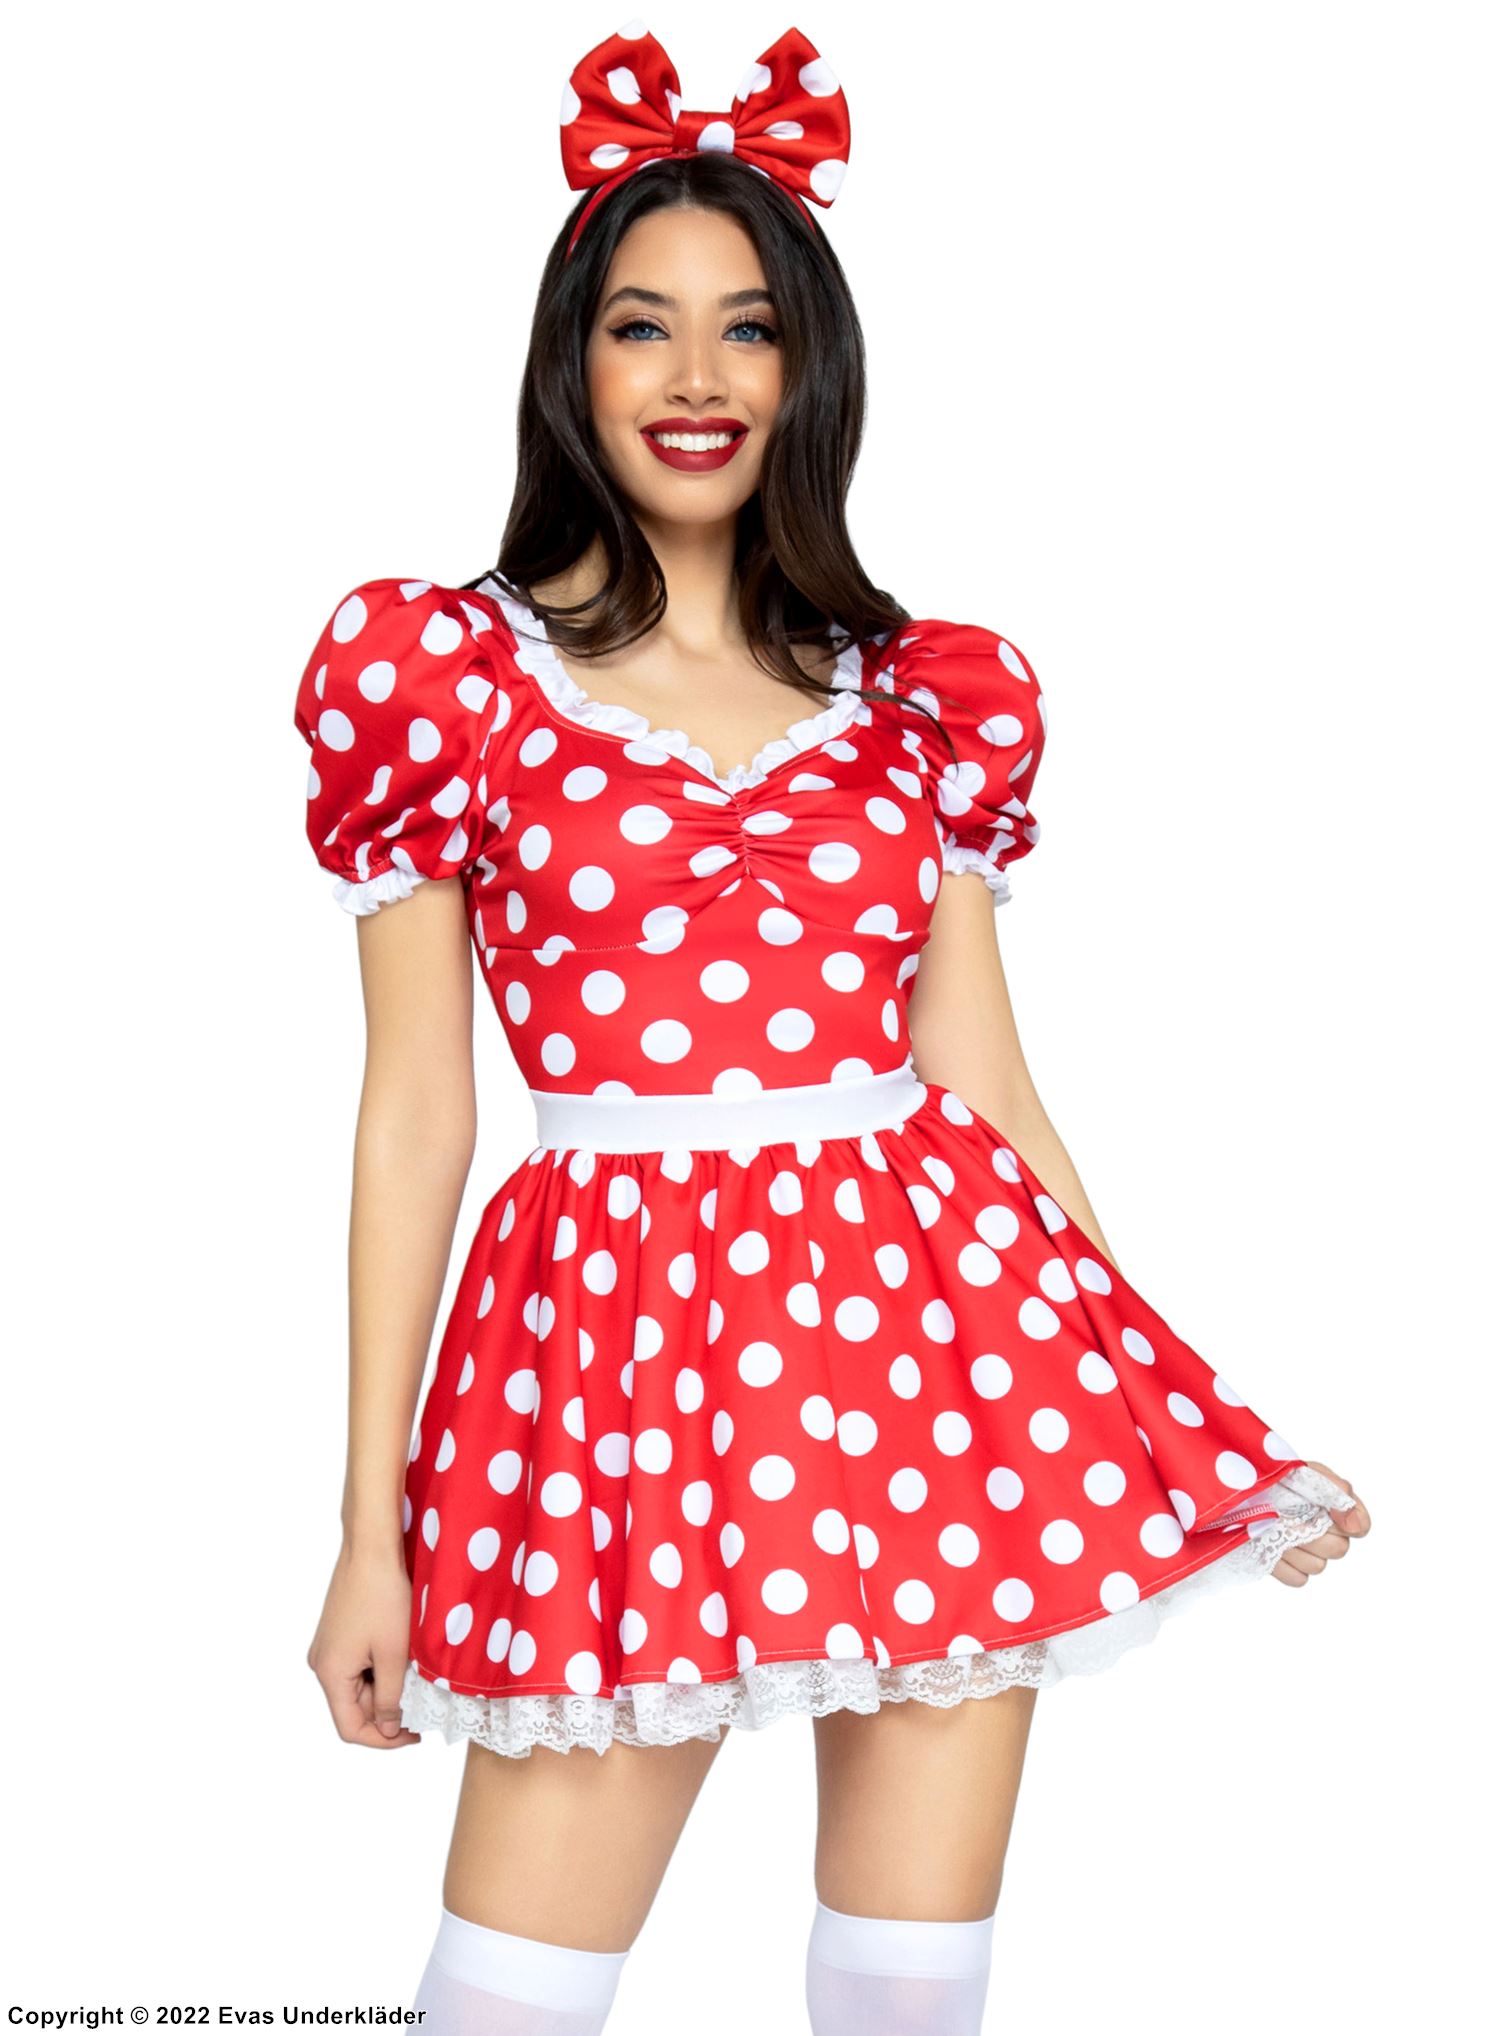 Female mouse, costume dress, big bow, lace edge, puff sleeves, polka dot